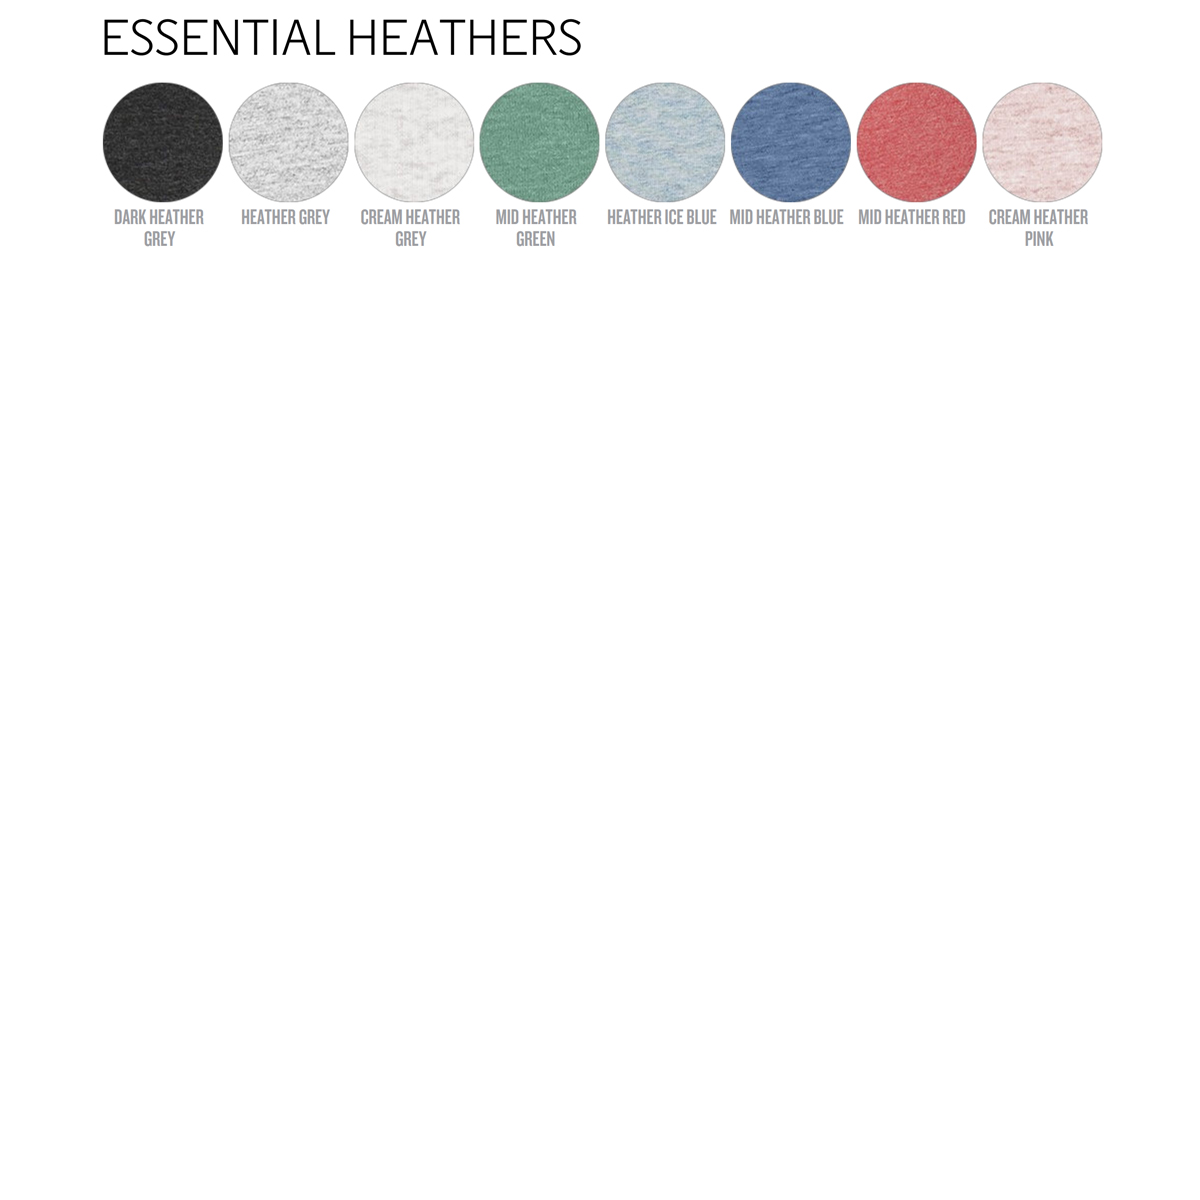 Essential heathers